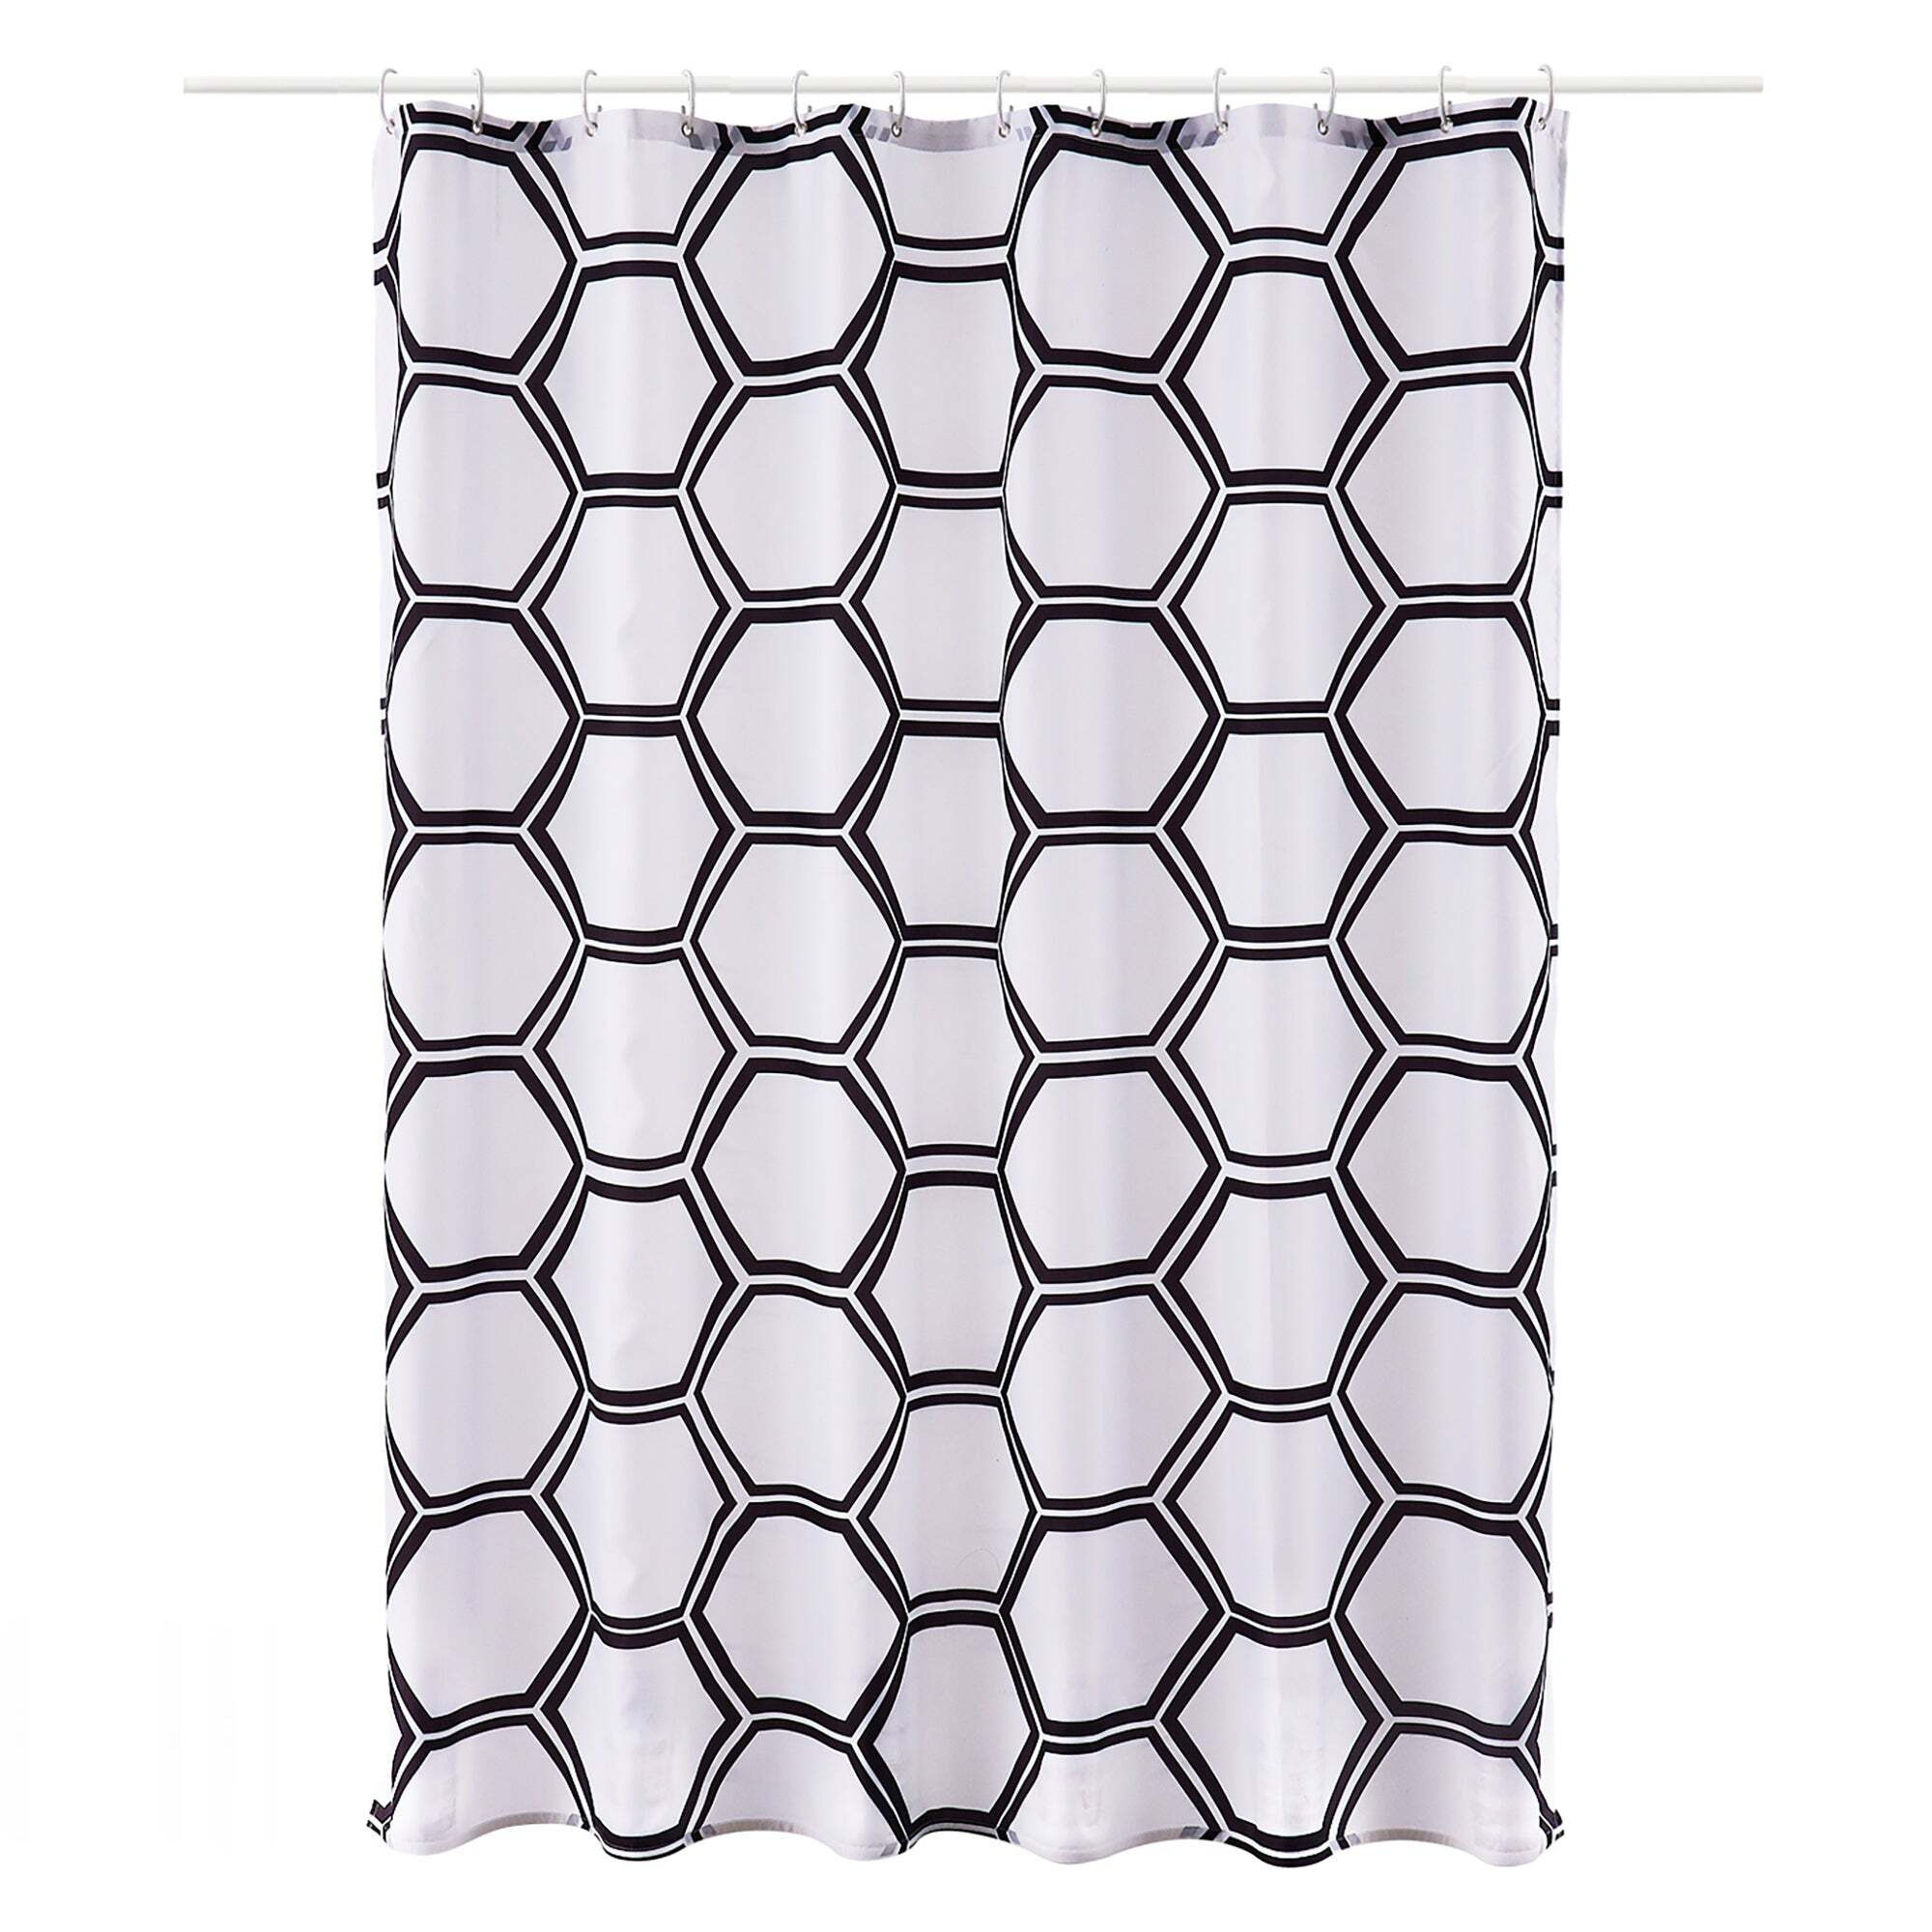 Honeycomb Shower Curtain White and Black